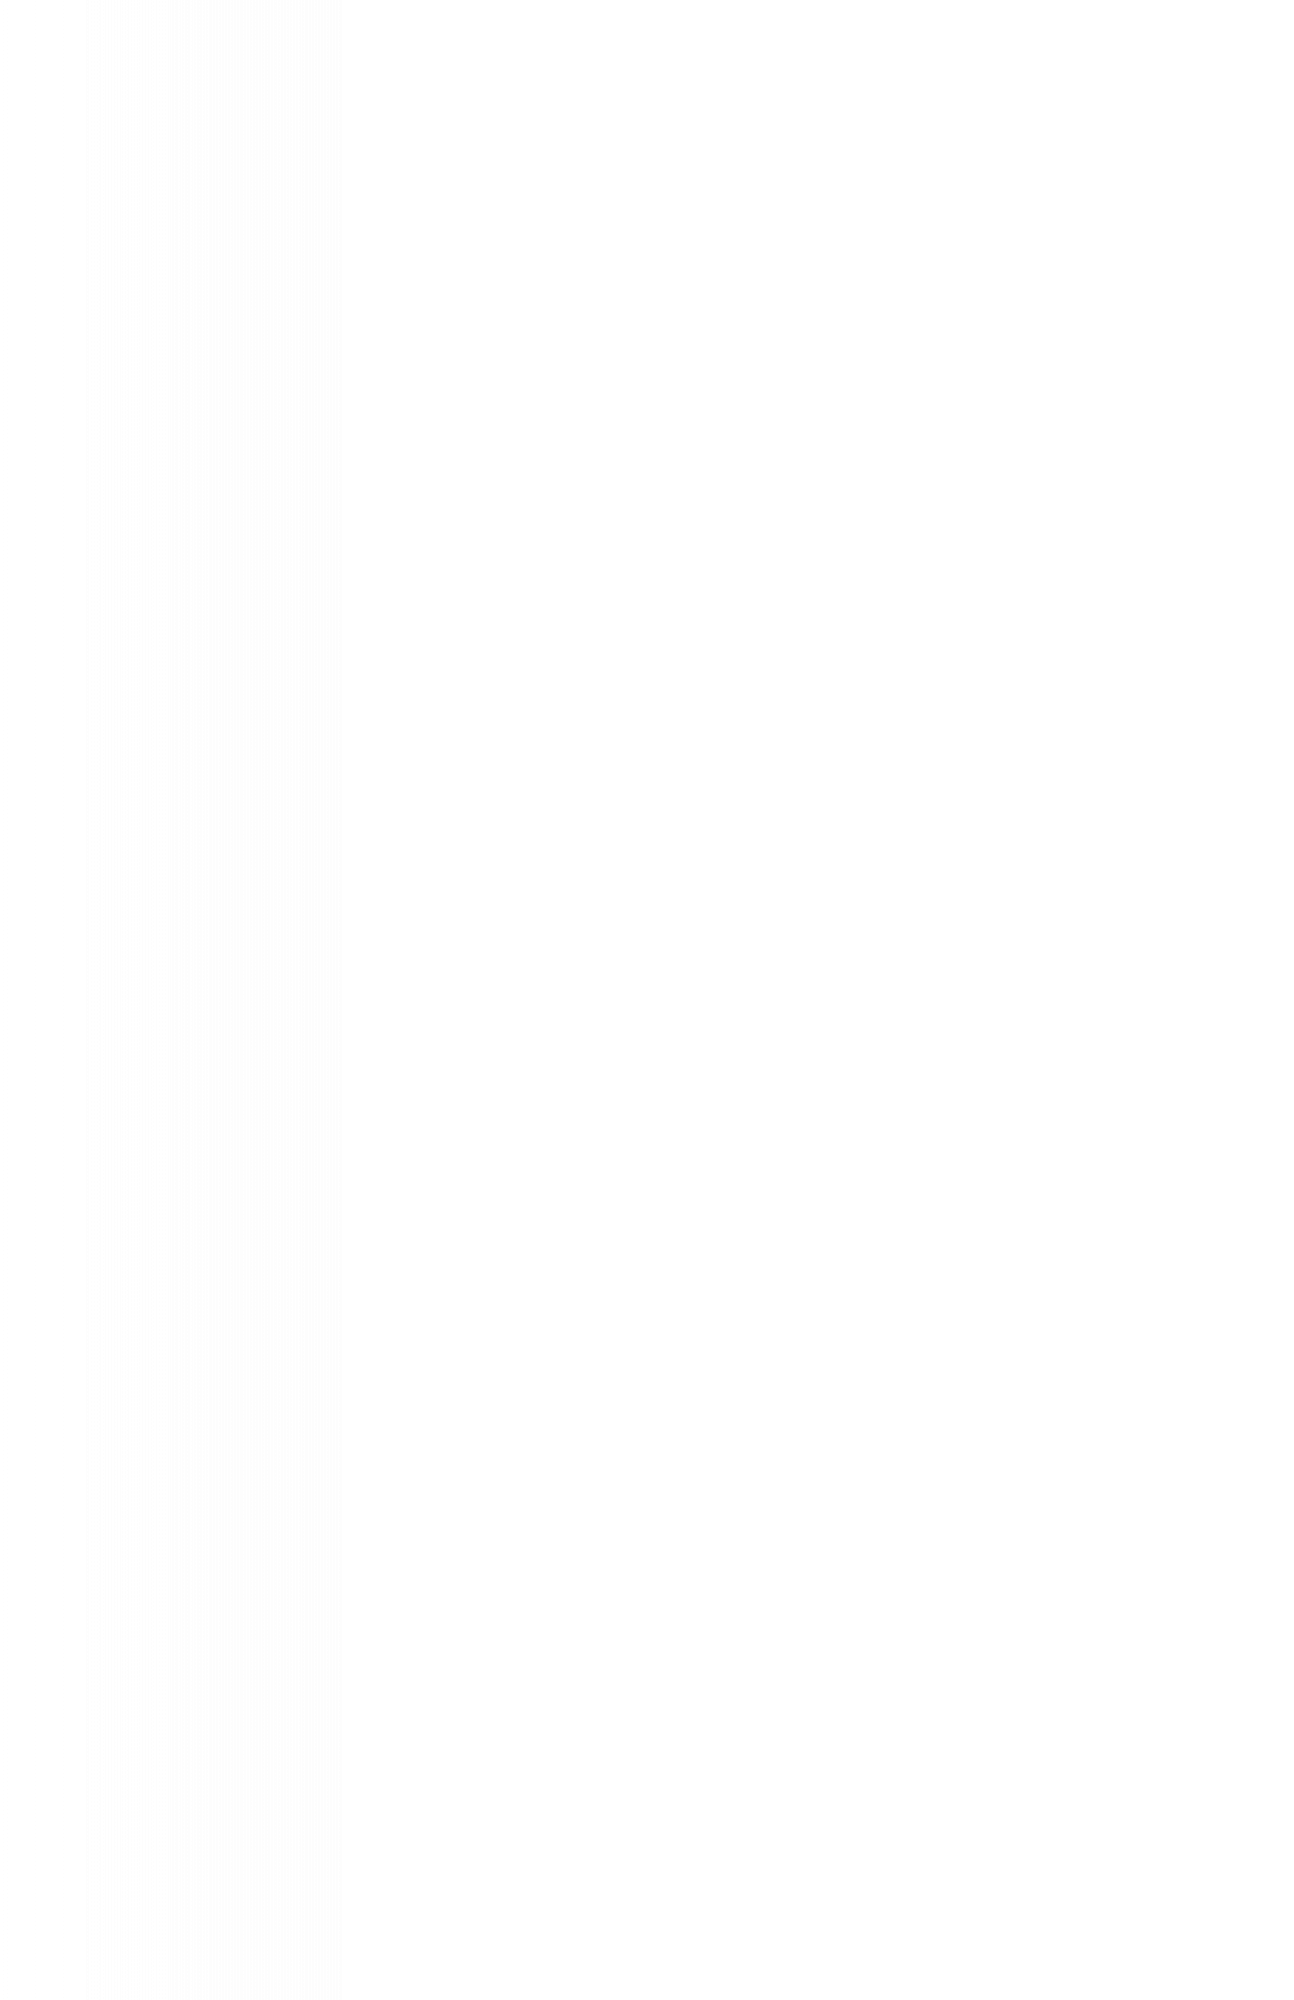 btwd-logo